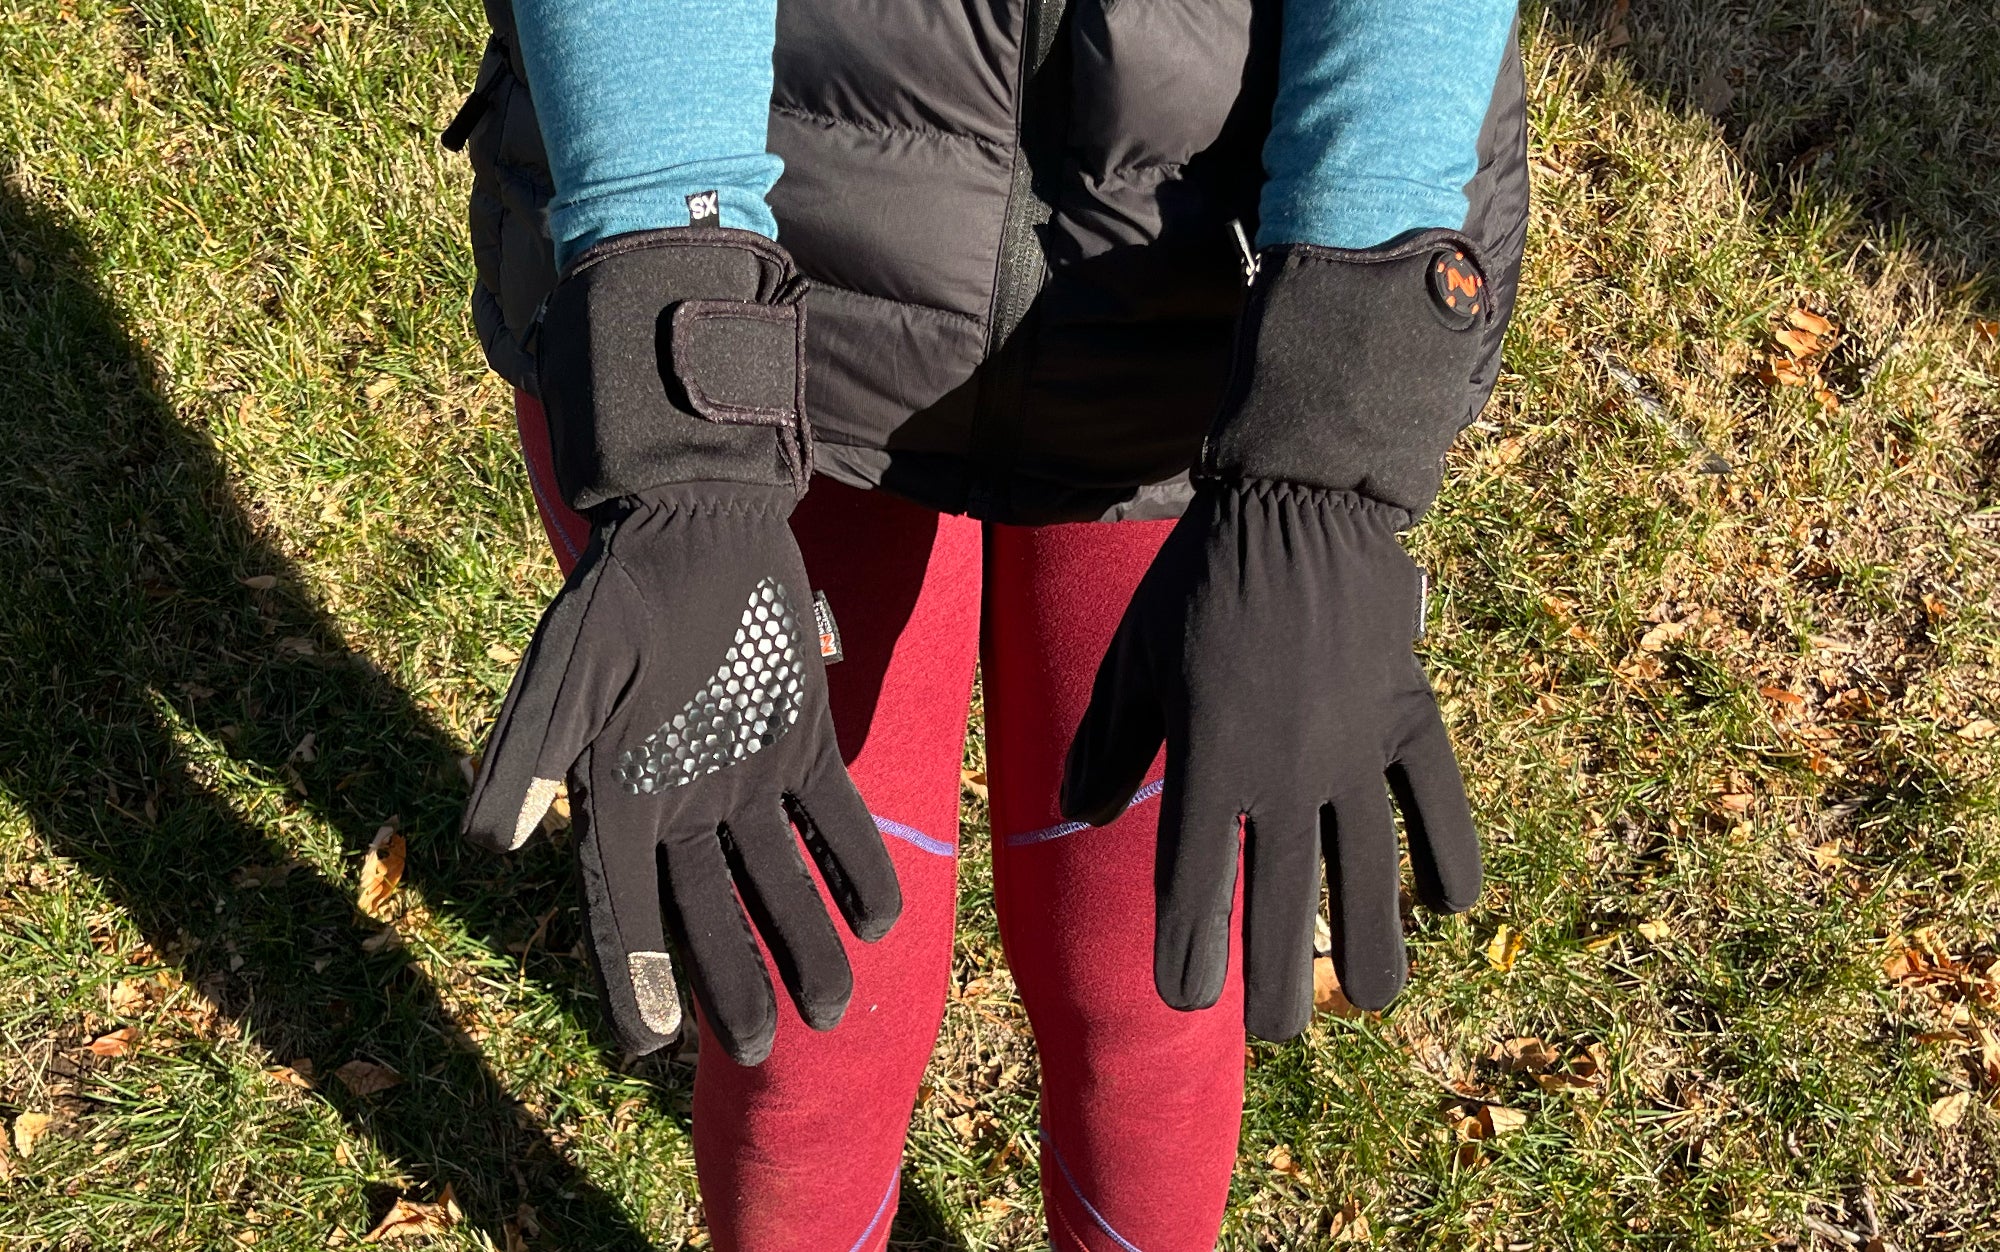 Field Sheer Heated Glove Liners